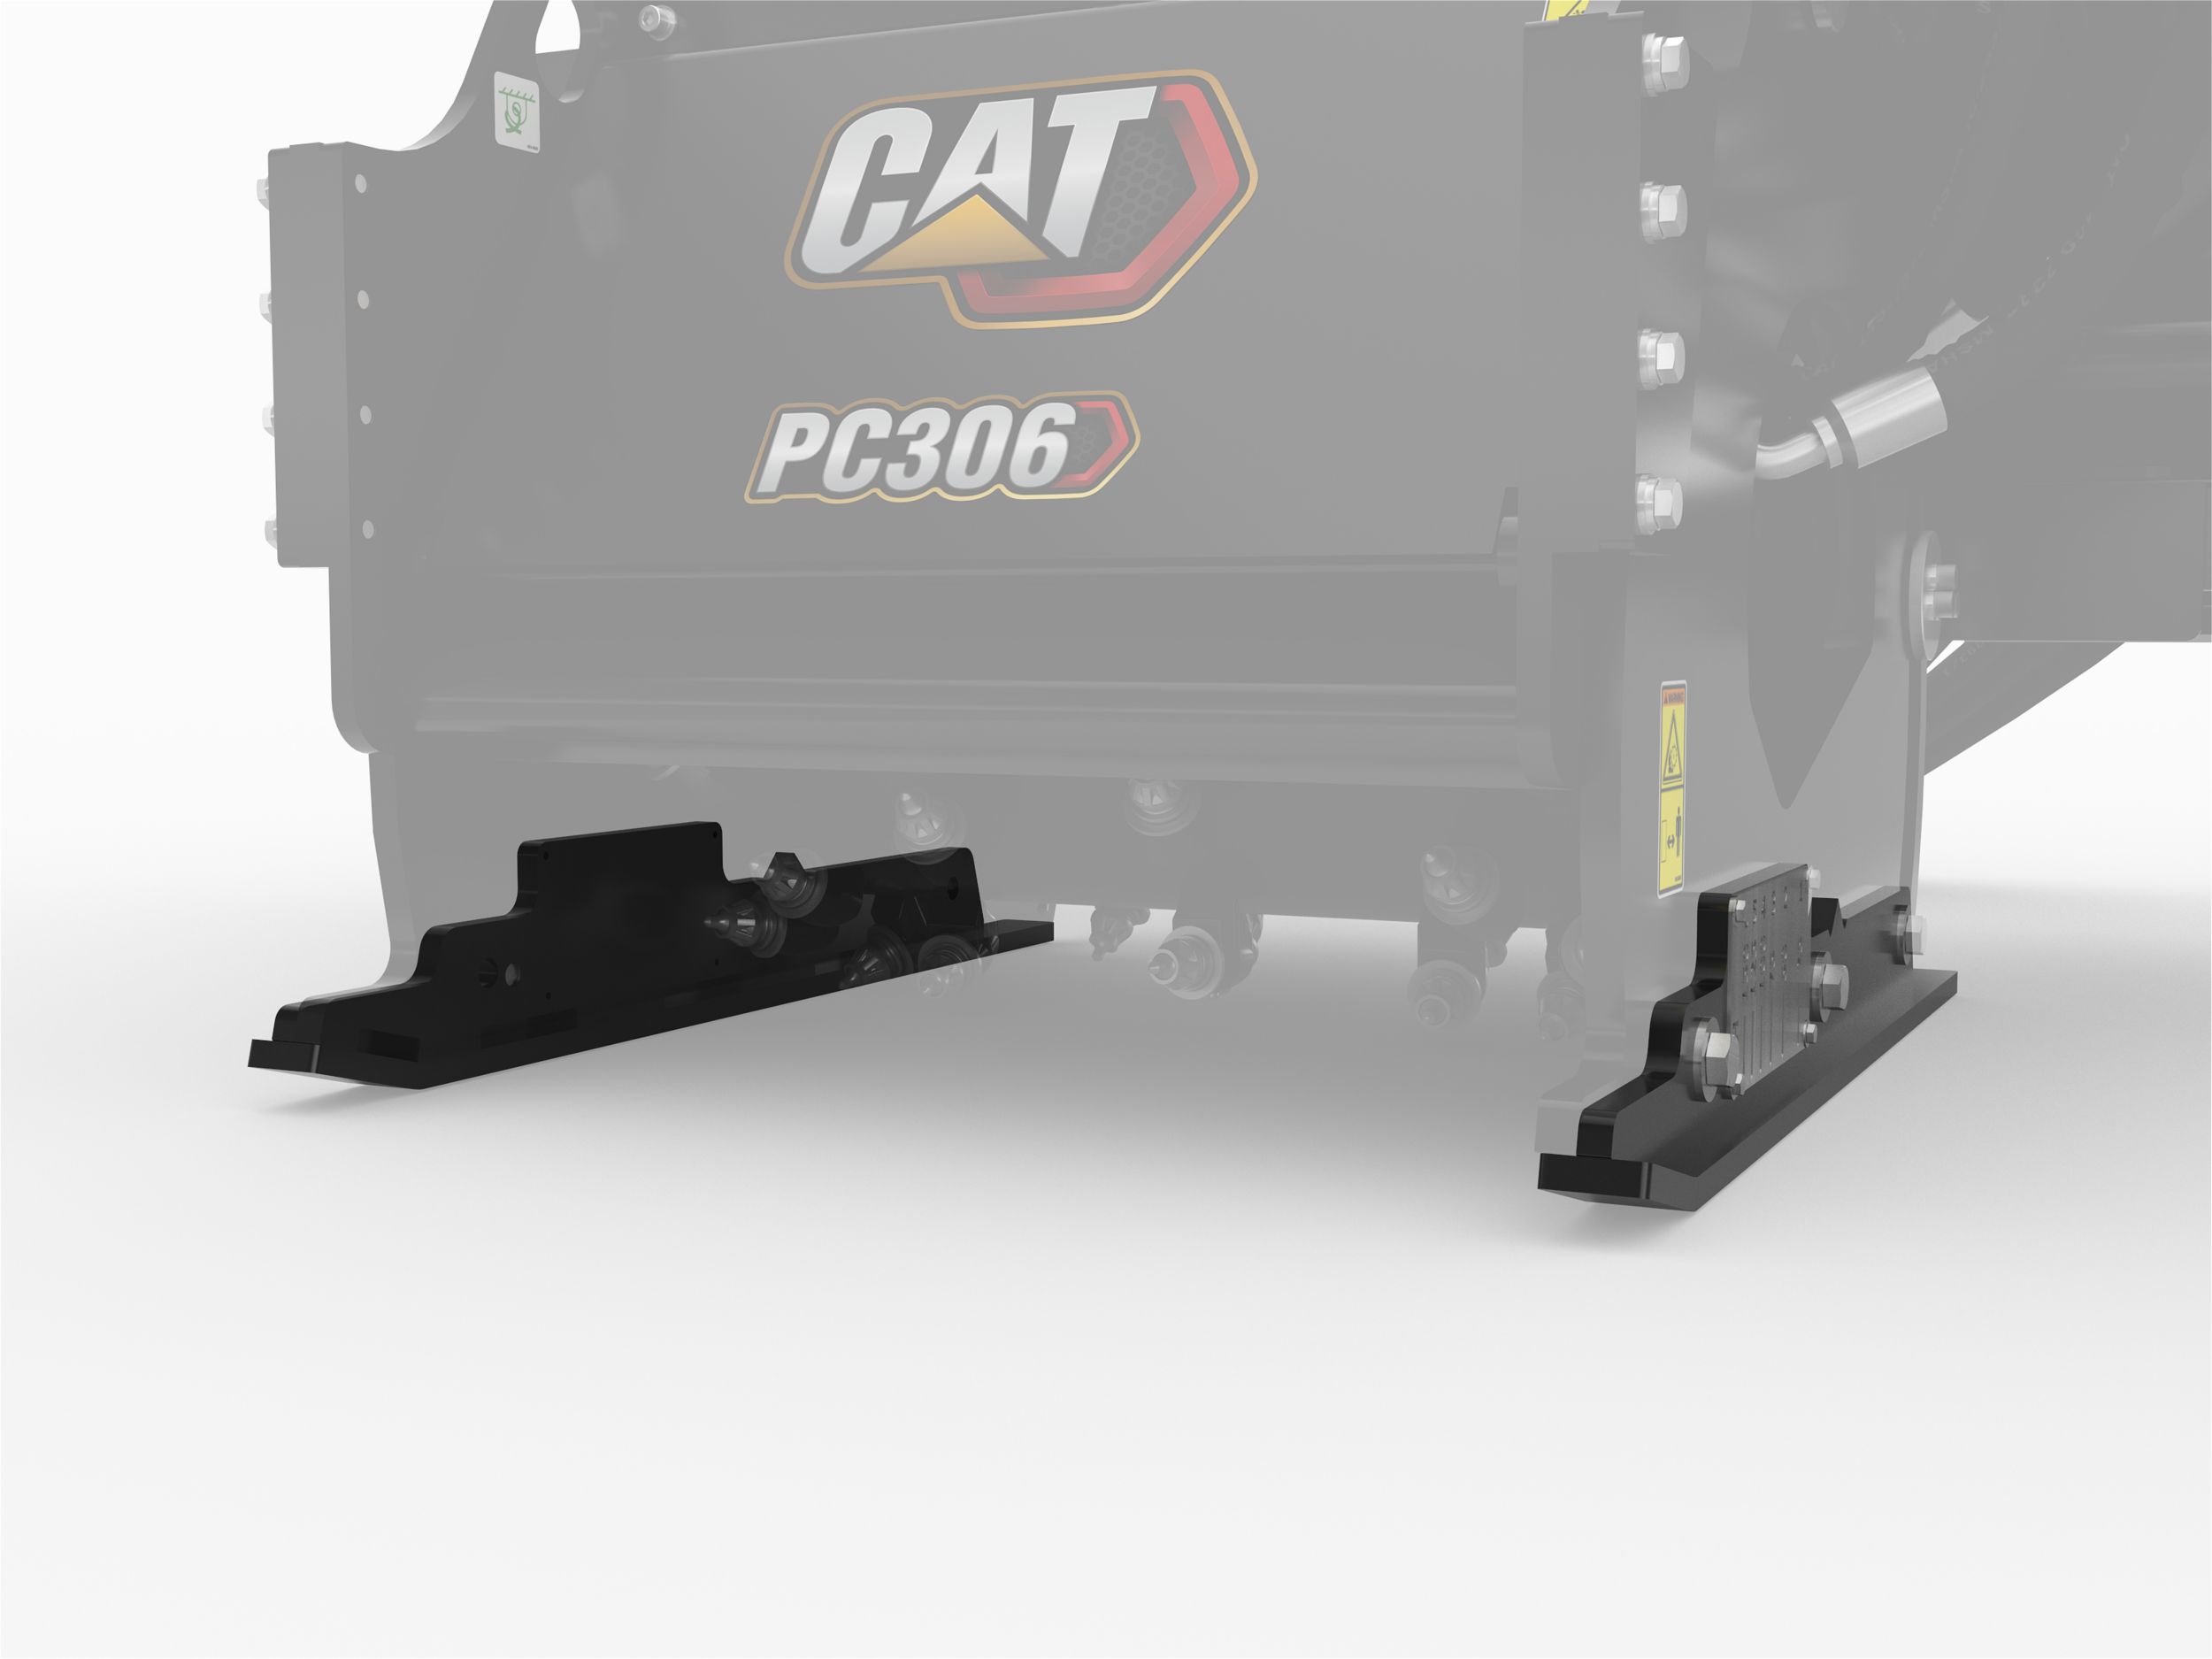 PC306 XD Cold Planers | Cat | Caterpillar